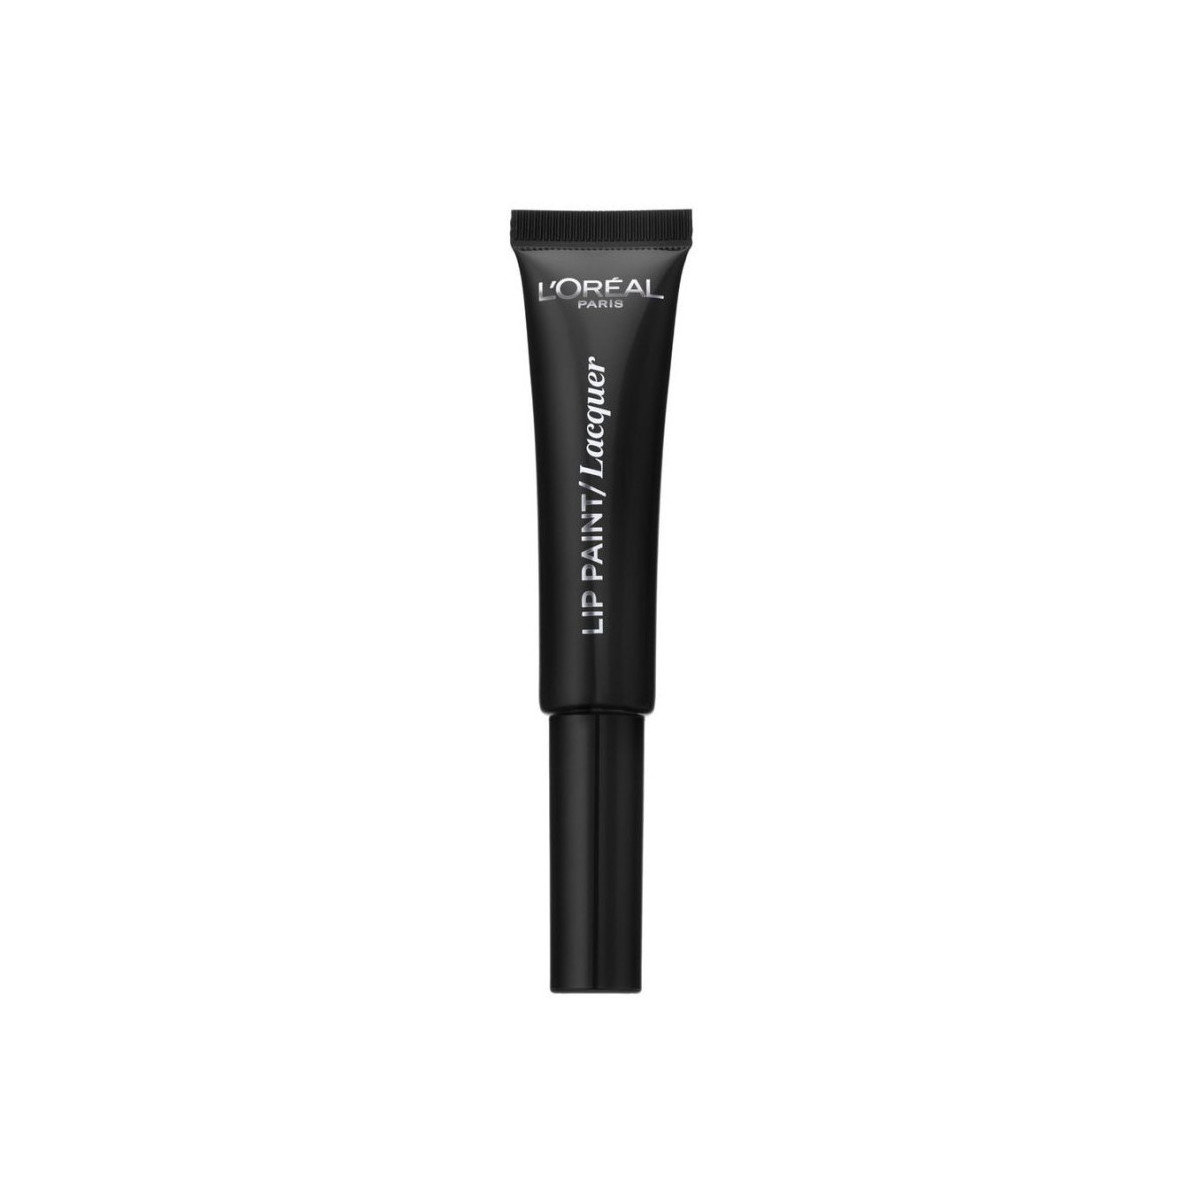 schoonheid Dames Lipstick L'oréal Onfeilbare vloeibare lippenstiftlak Zwart